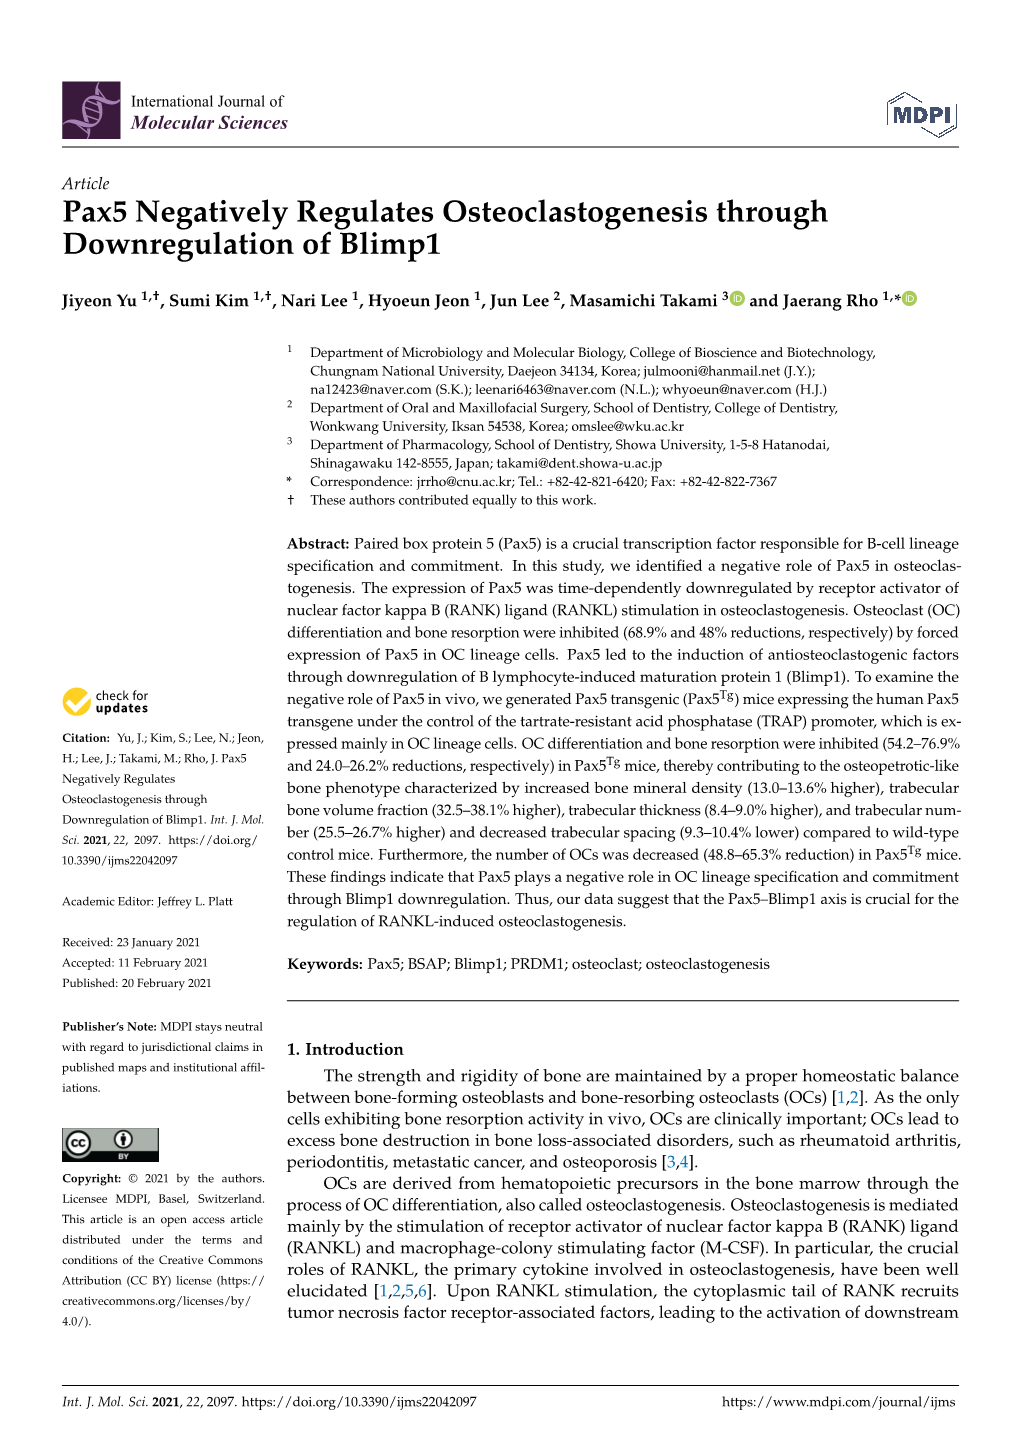 Pax5 Negatively Regulates Osteoclastogenesis Through Downregulation of Blimp1